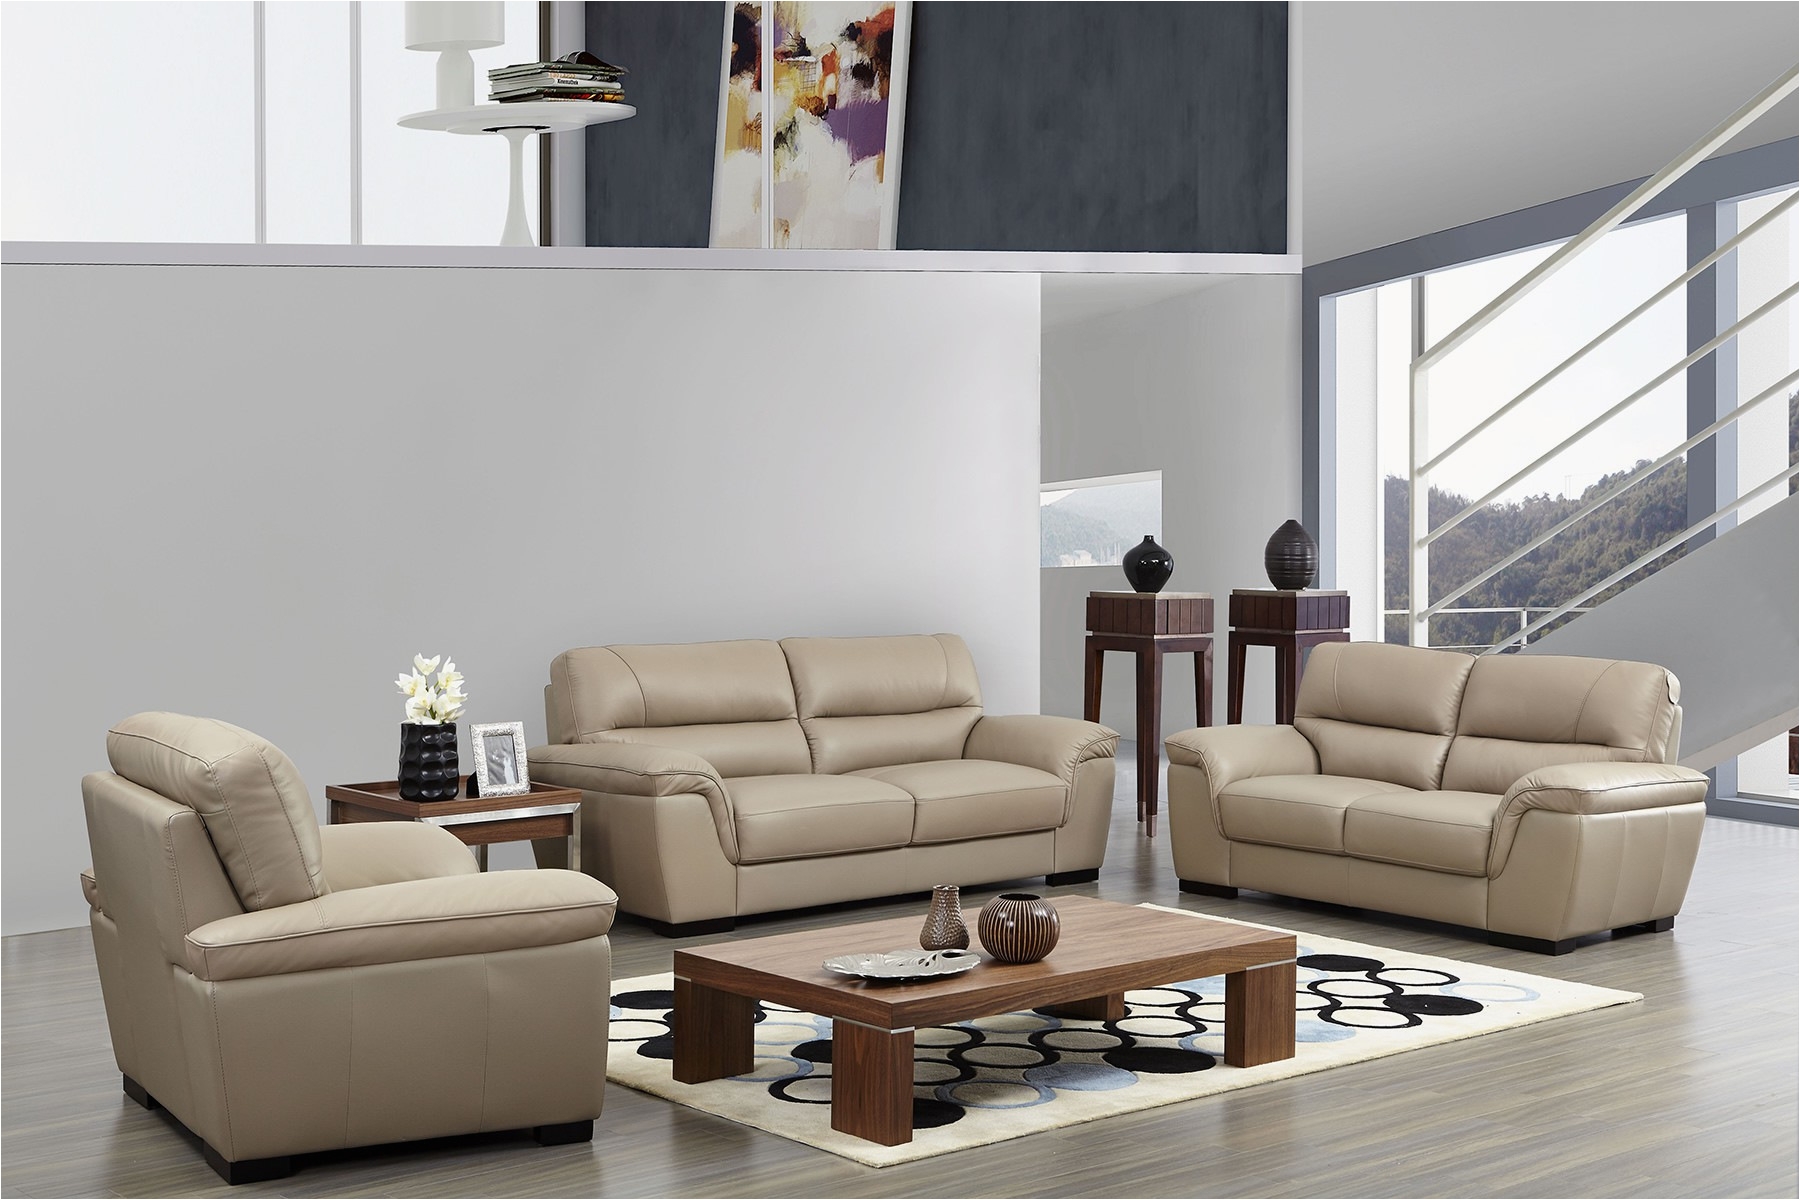 harlem furniture living room sets new sofas sectional sofa bed sleeper sofas living room furniture photograph